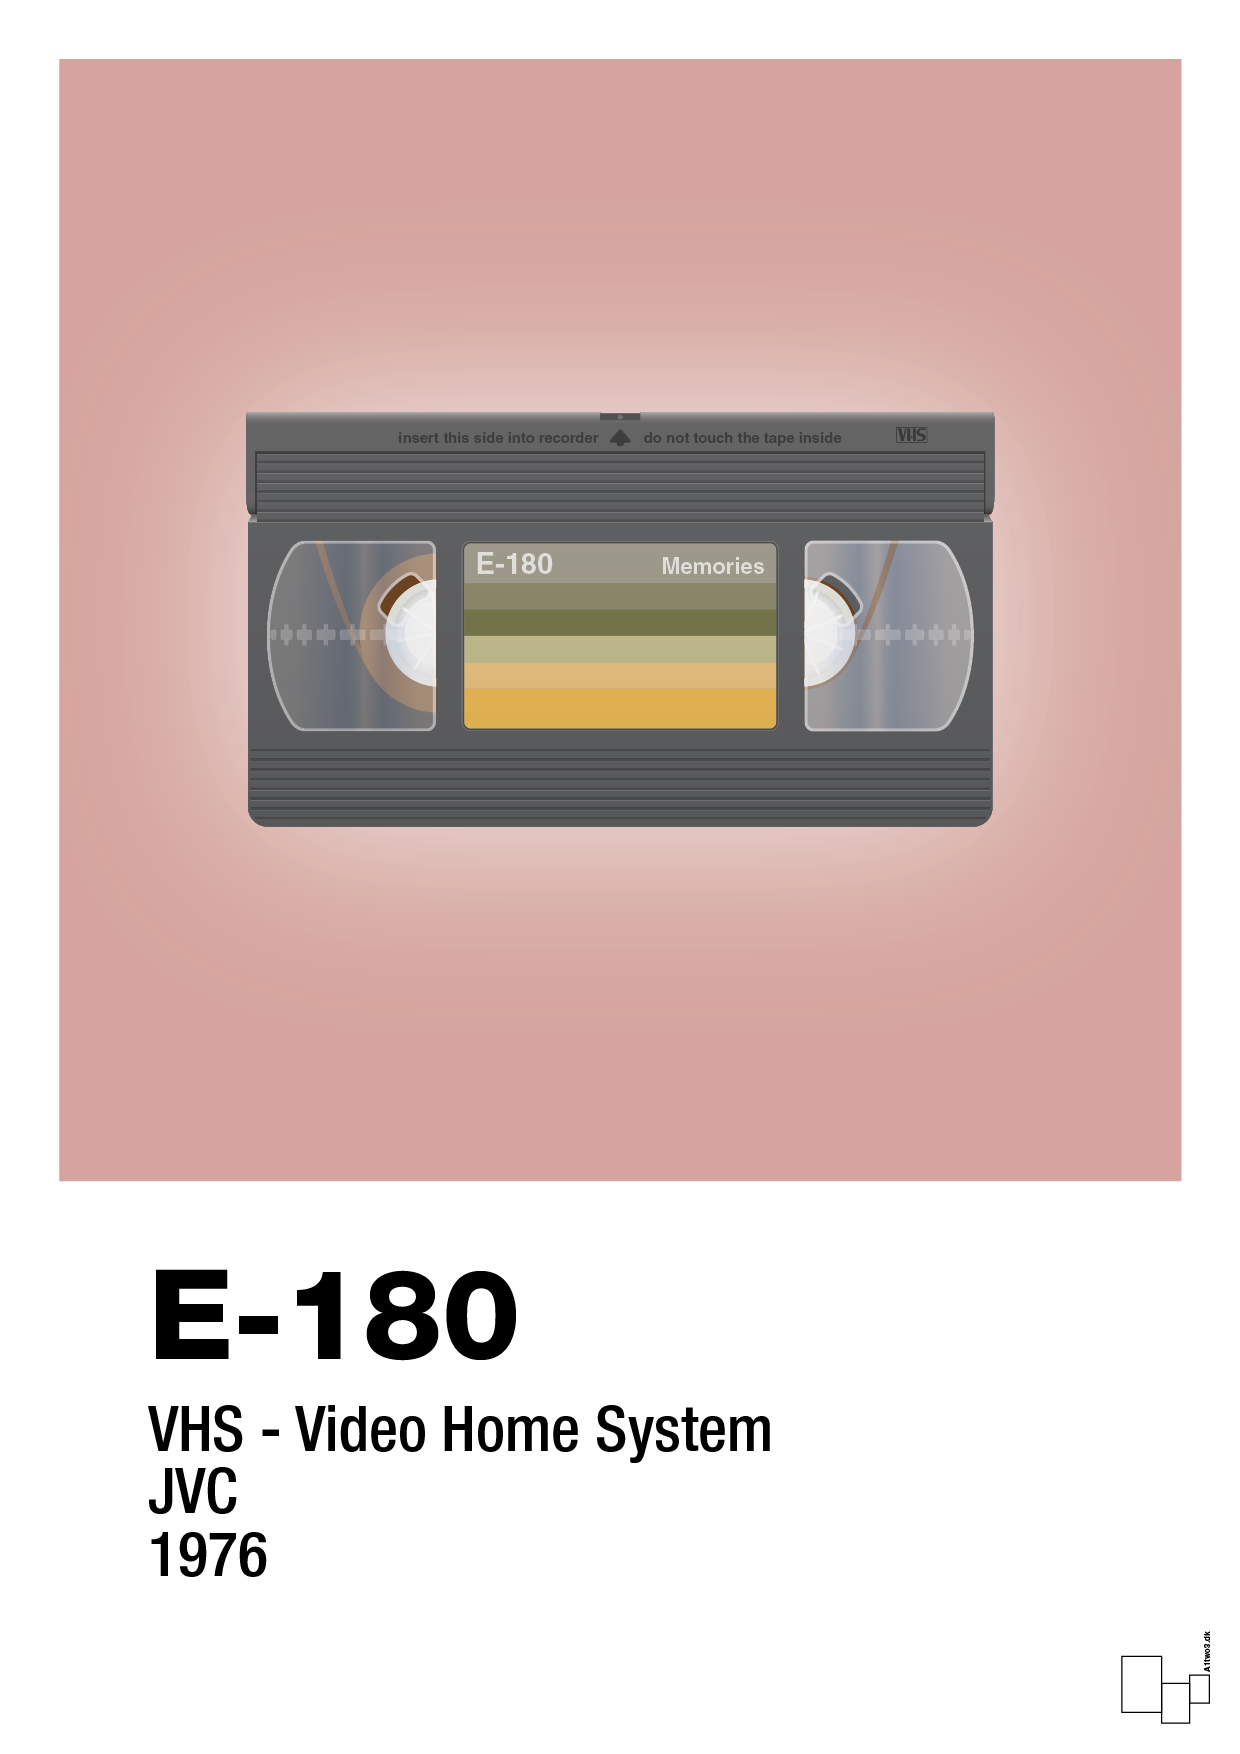 videobånd e-180 - Plakat med Grafik i Bubble Shell